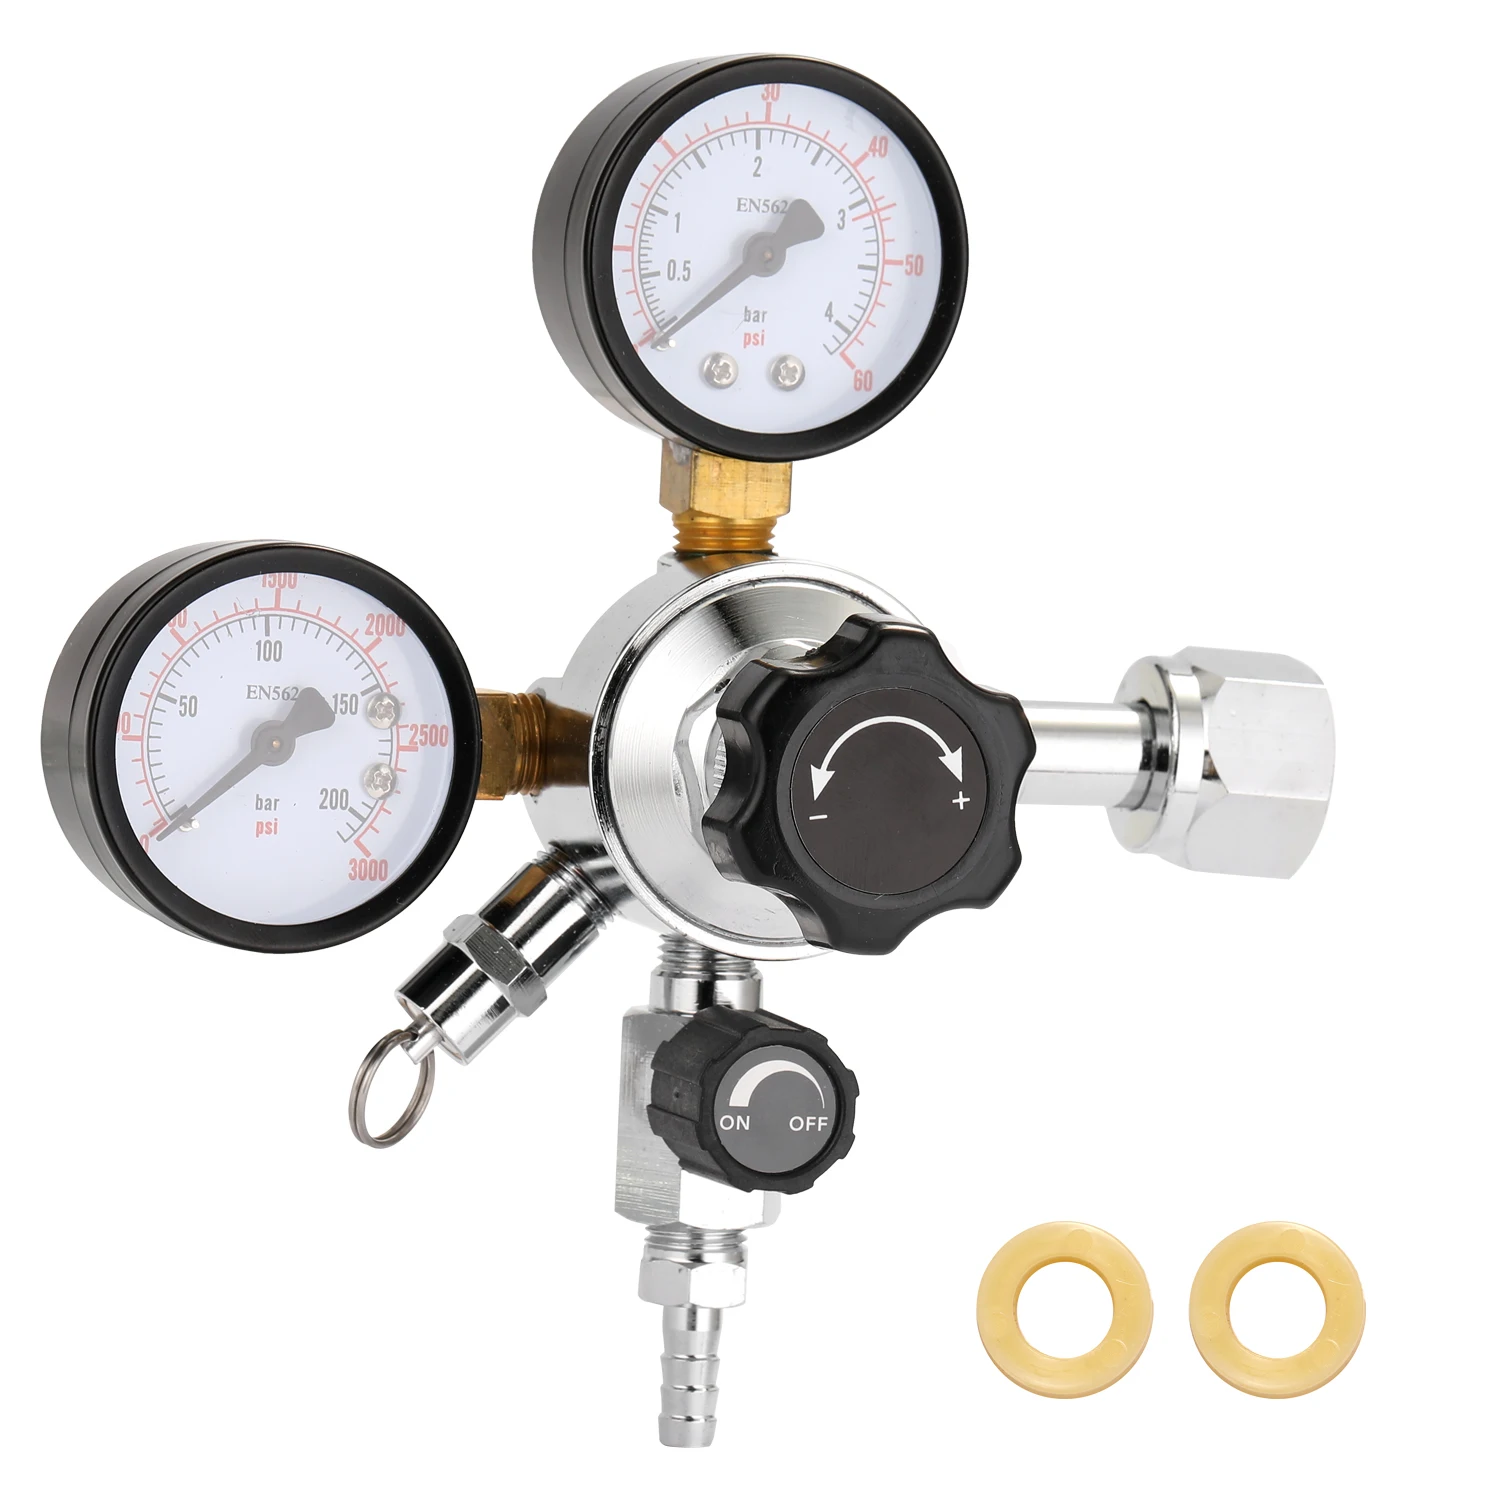 

Beer Keg Co2 Regulator Safety Pressure Relief Valve 0-3000 Psi Tanks Pressure Adjustable Brewing Equipment CO2 Regulator